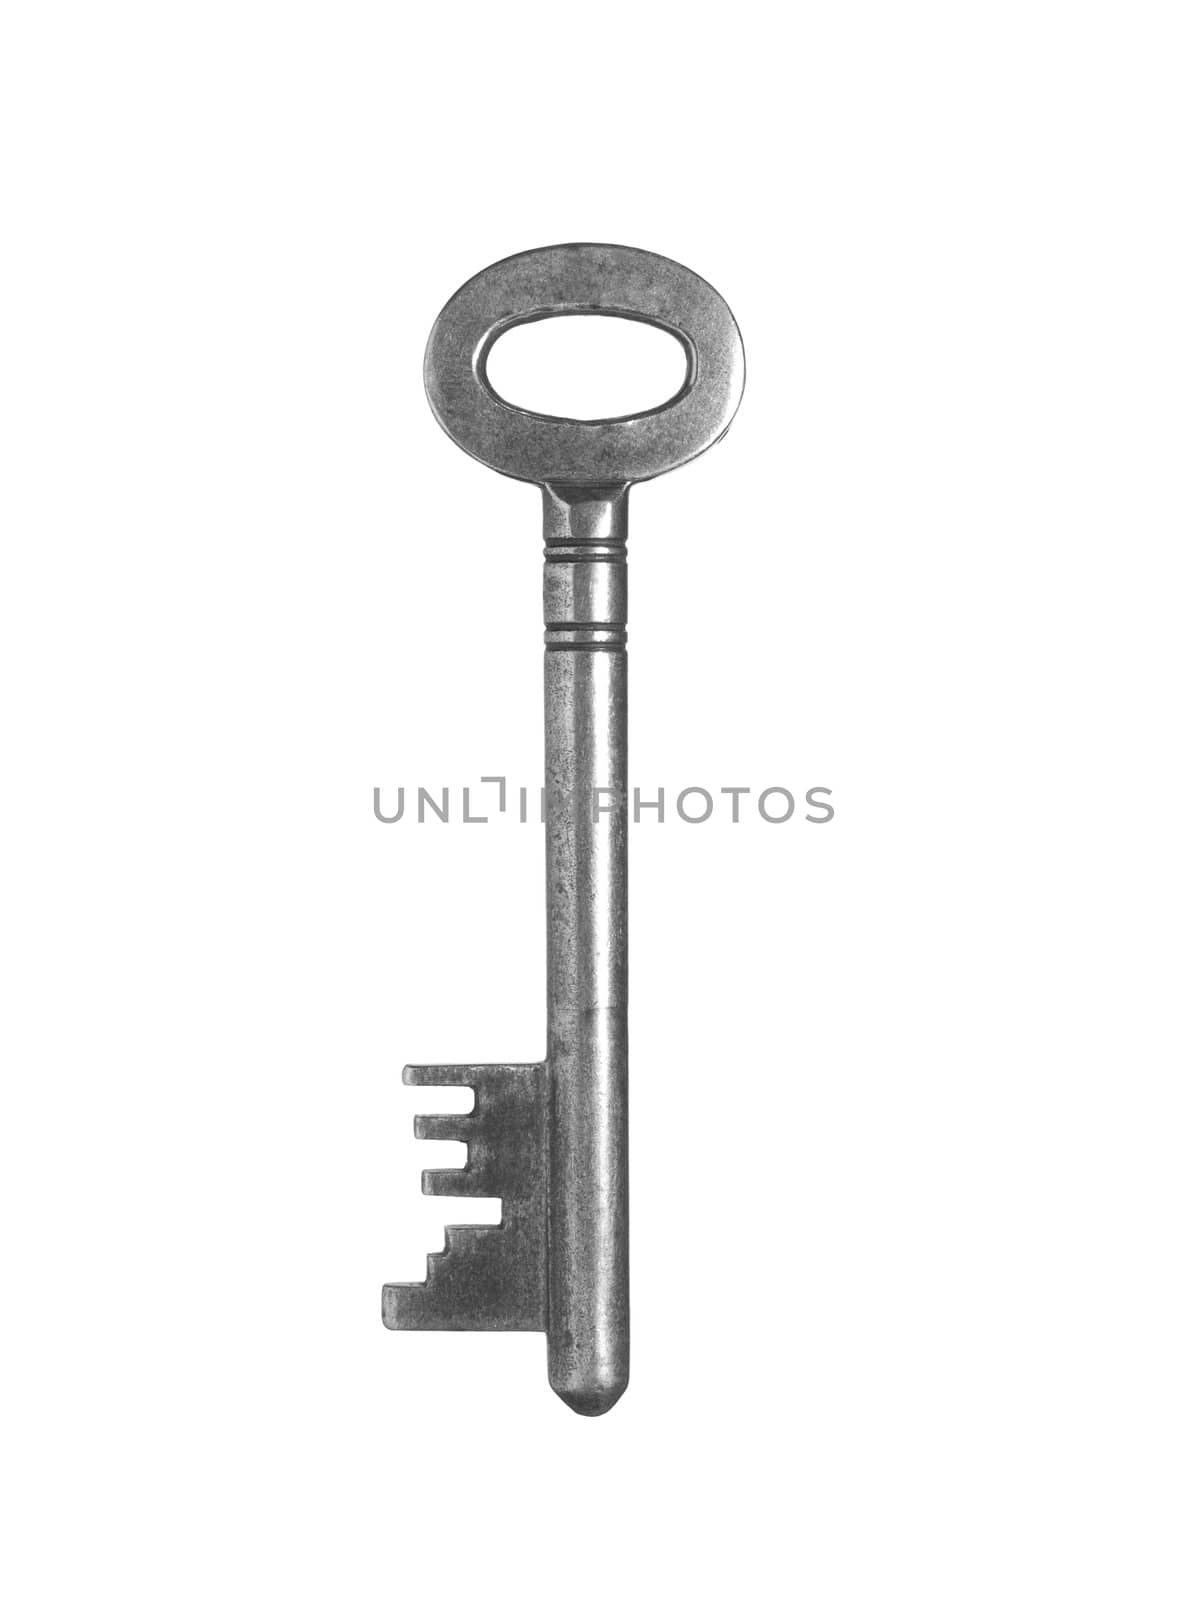 Isolated old key by antonprado